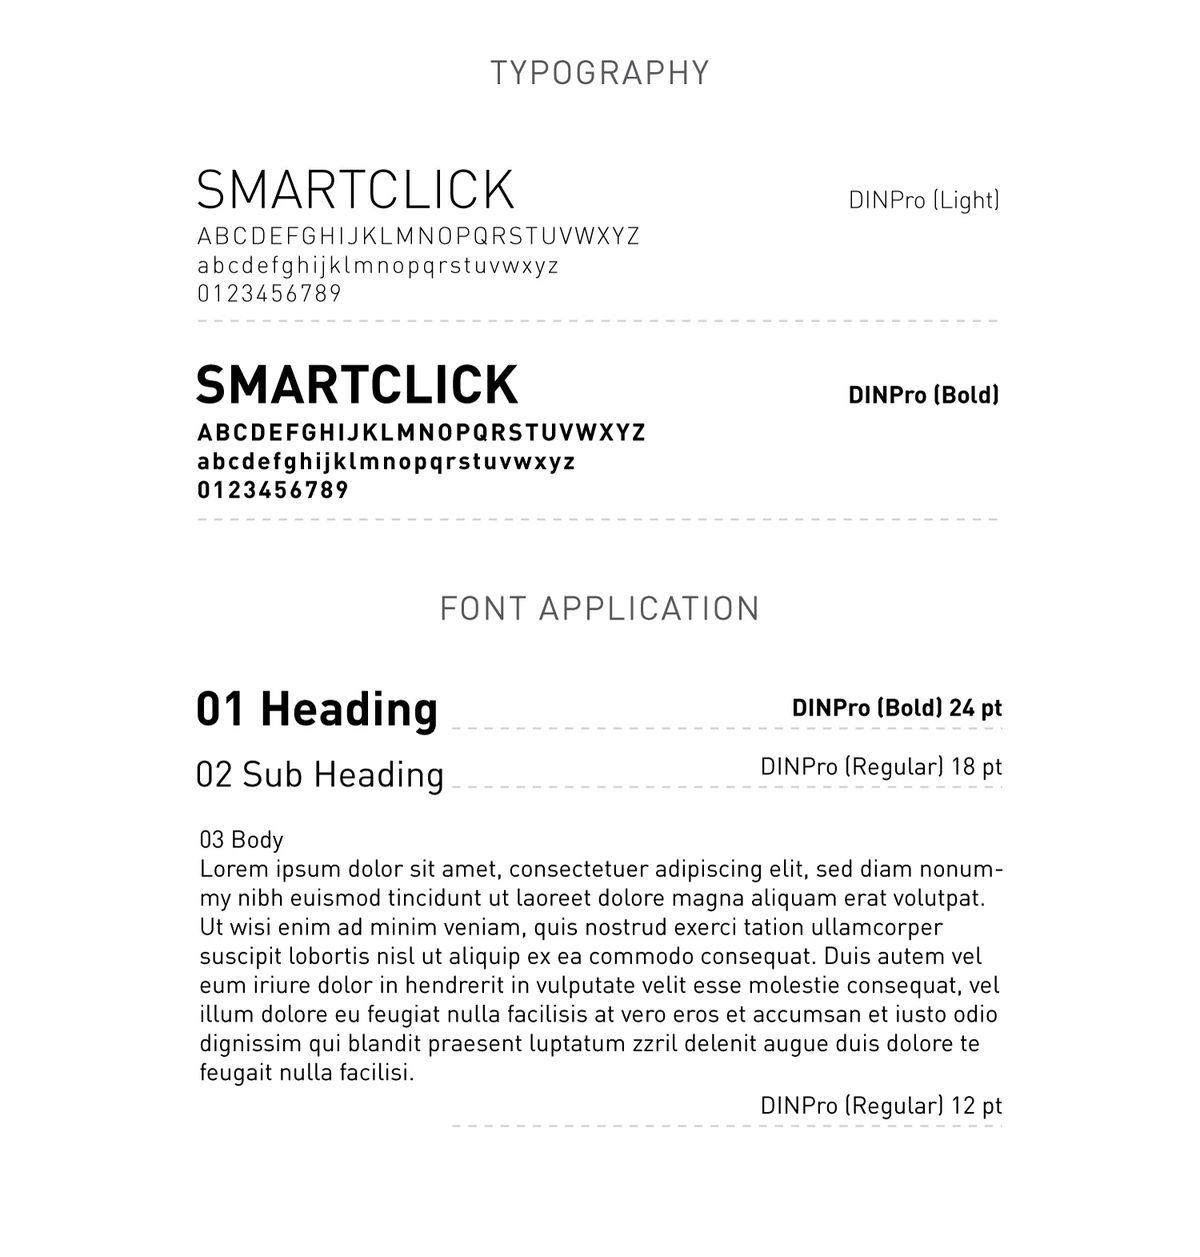 Smartclick Brand Identity & Guidelines Book Illustration 2